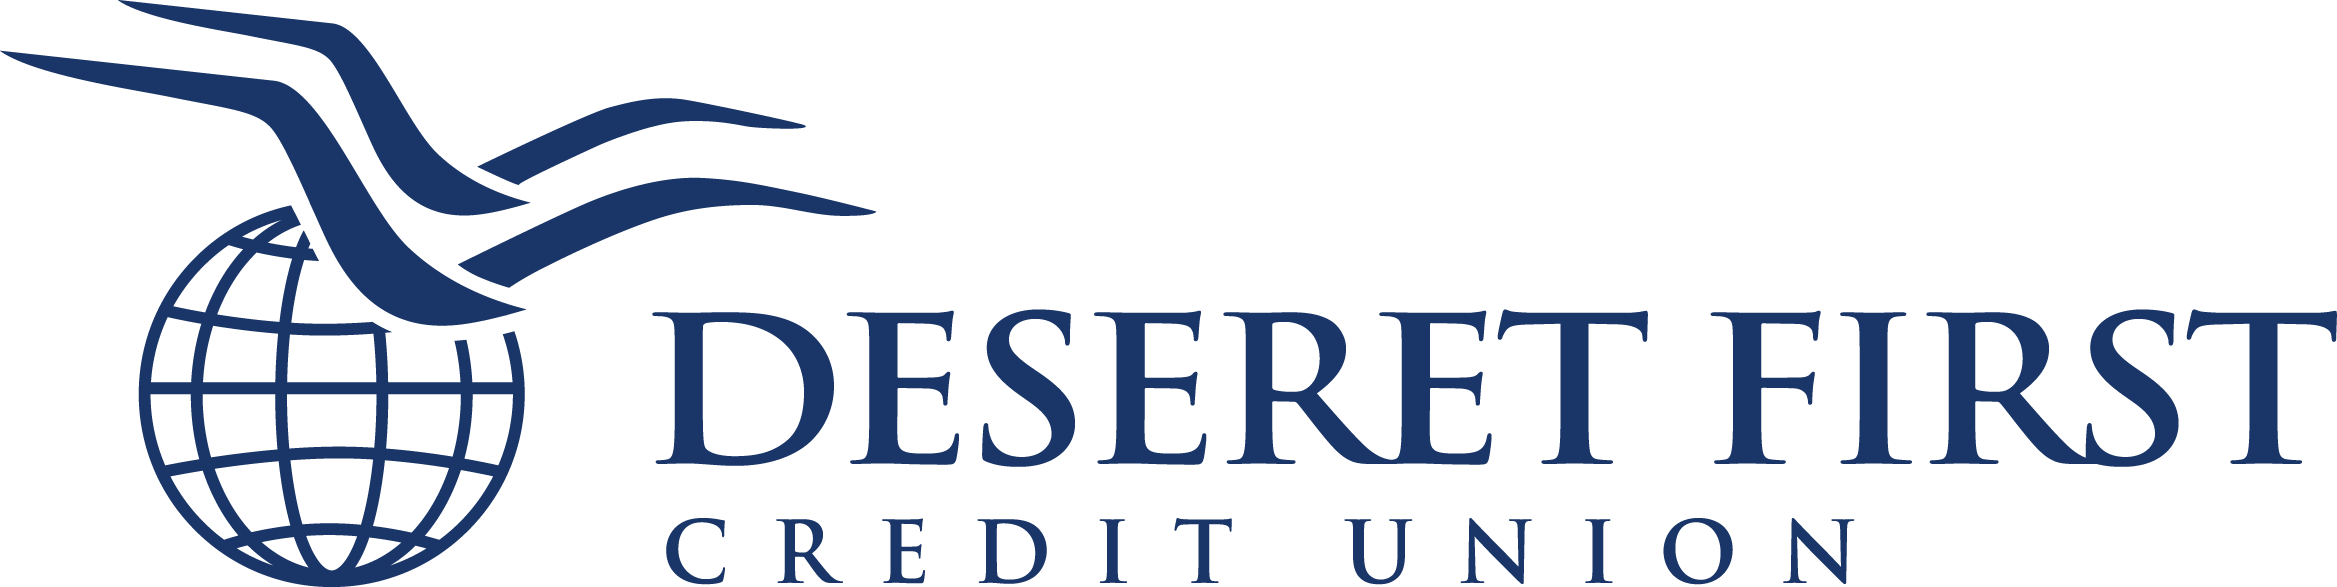 Deseret Logo - Deseret First Credit Union